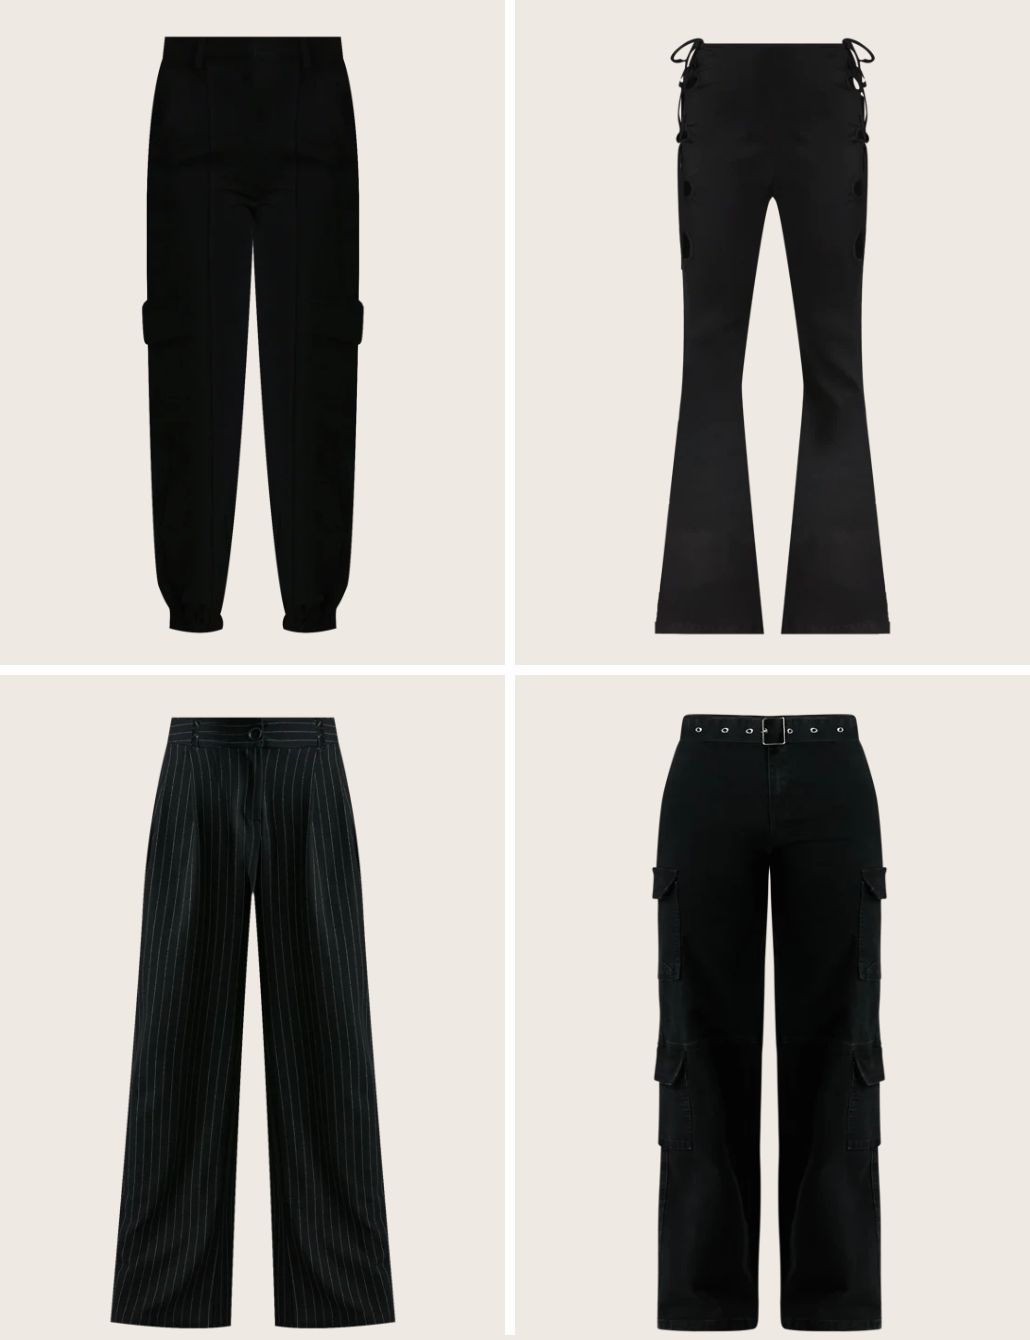 Best Black Pants for Women